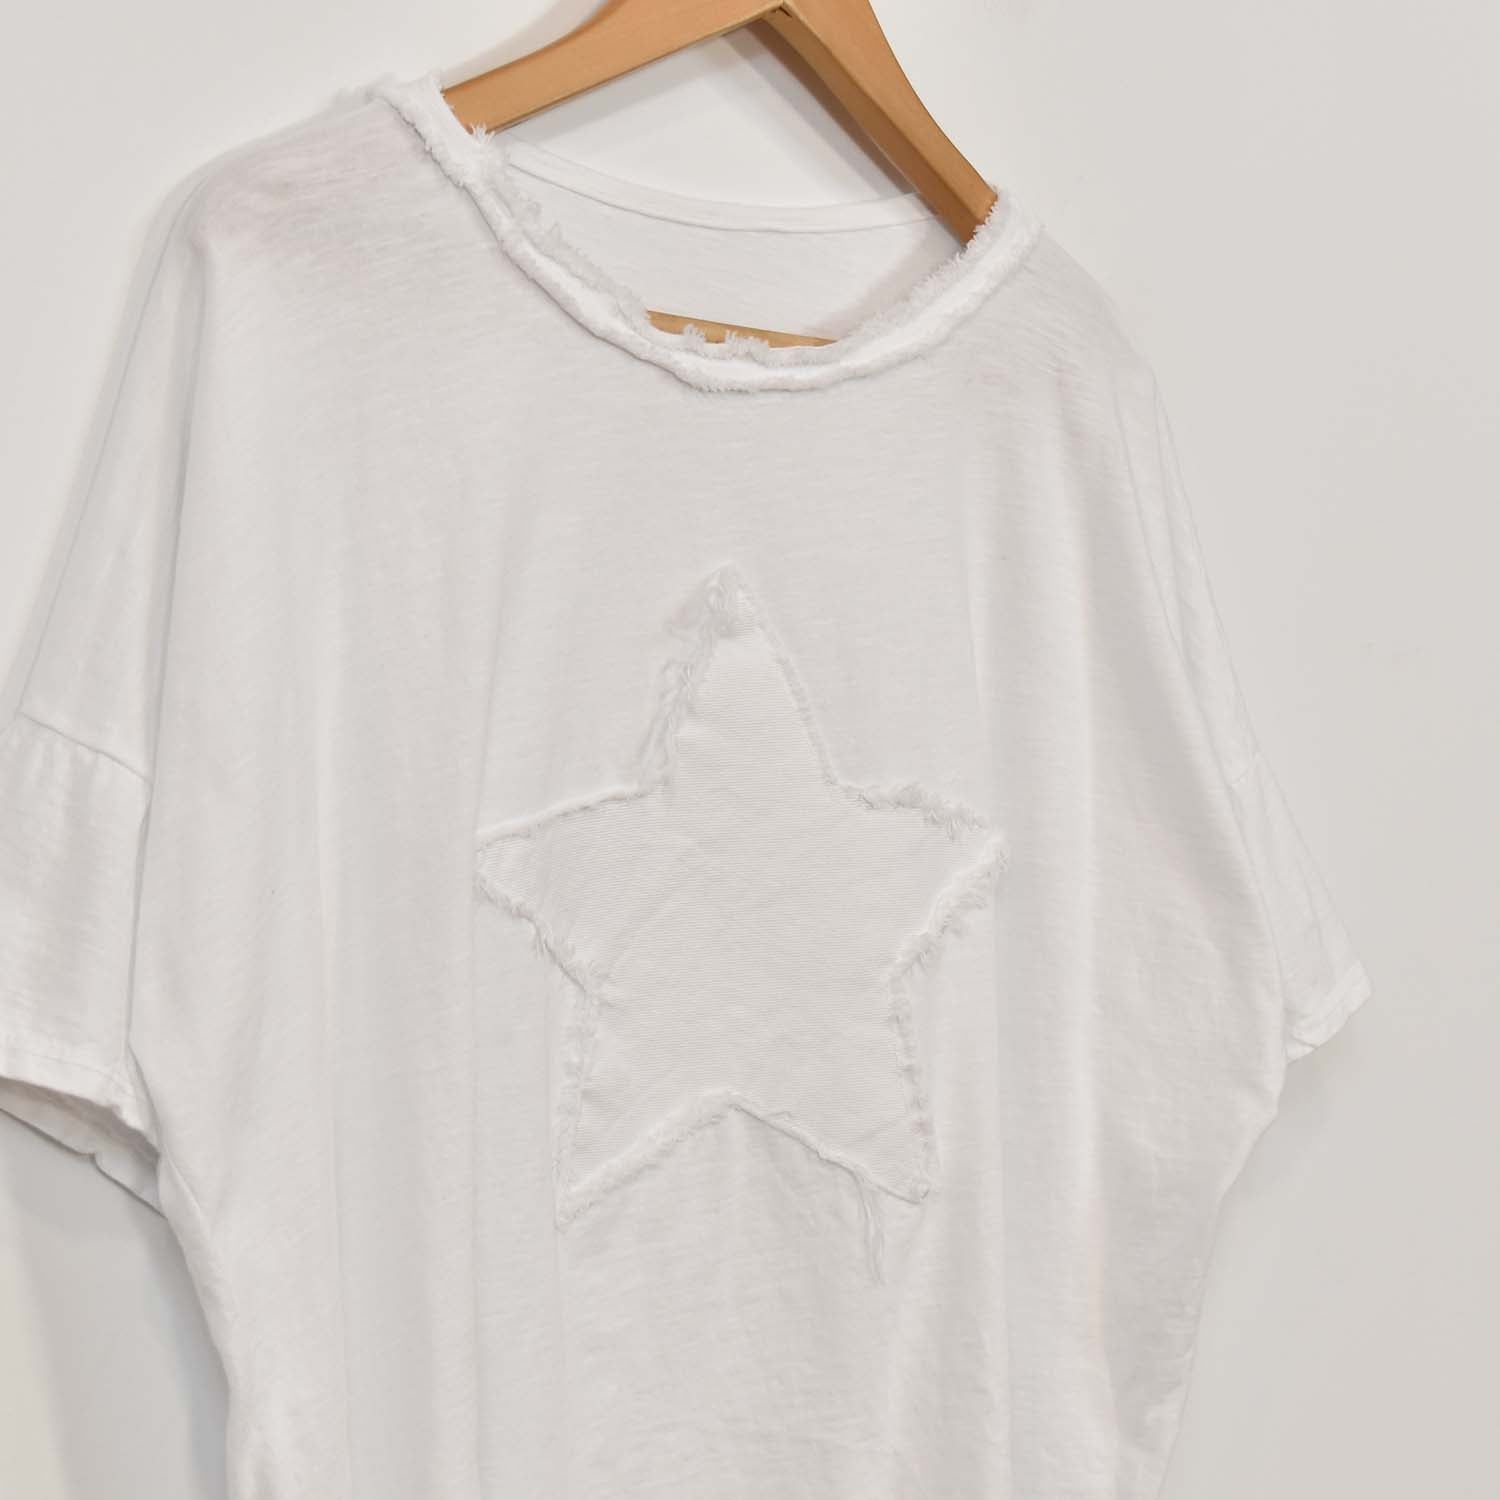 White fringed star t-shirt